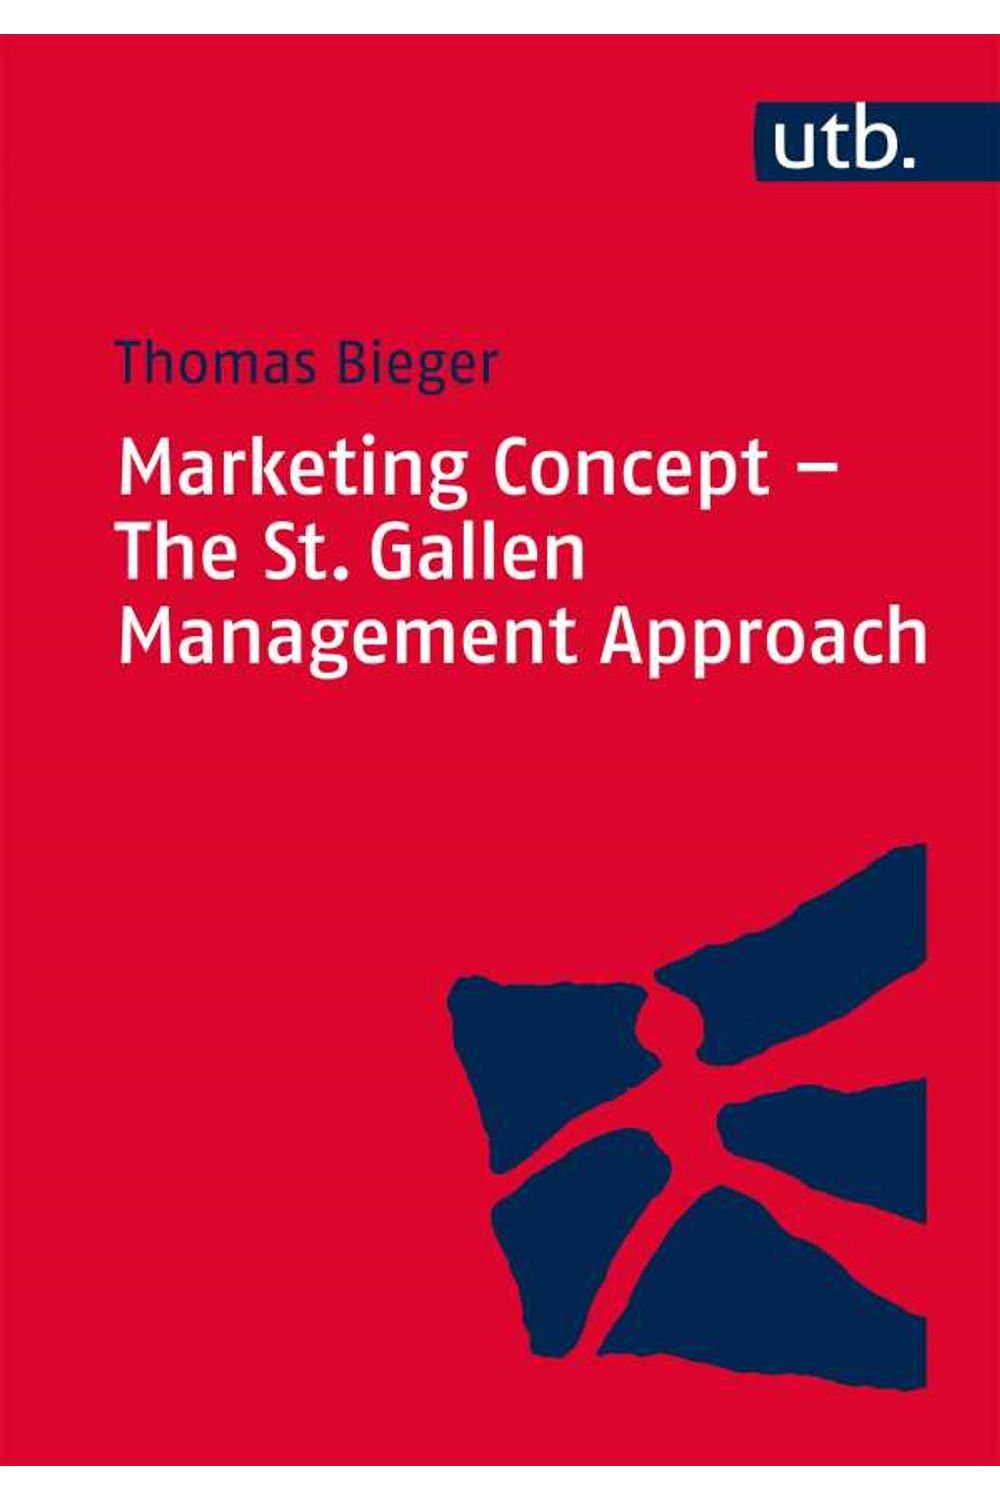 bw-marketing-concept-the-st-gallen-management-approach-utb-9783846344644